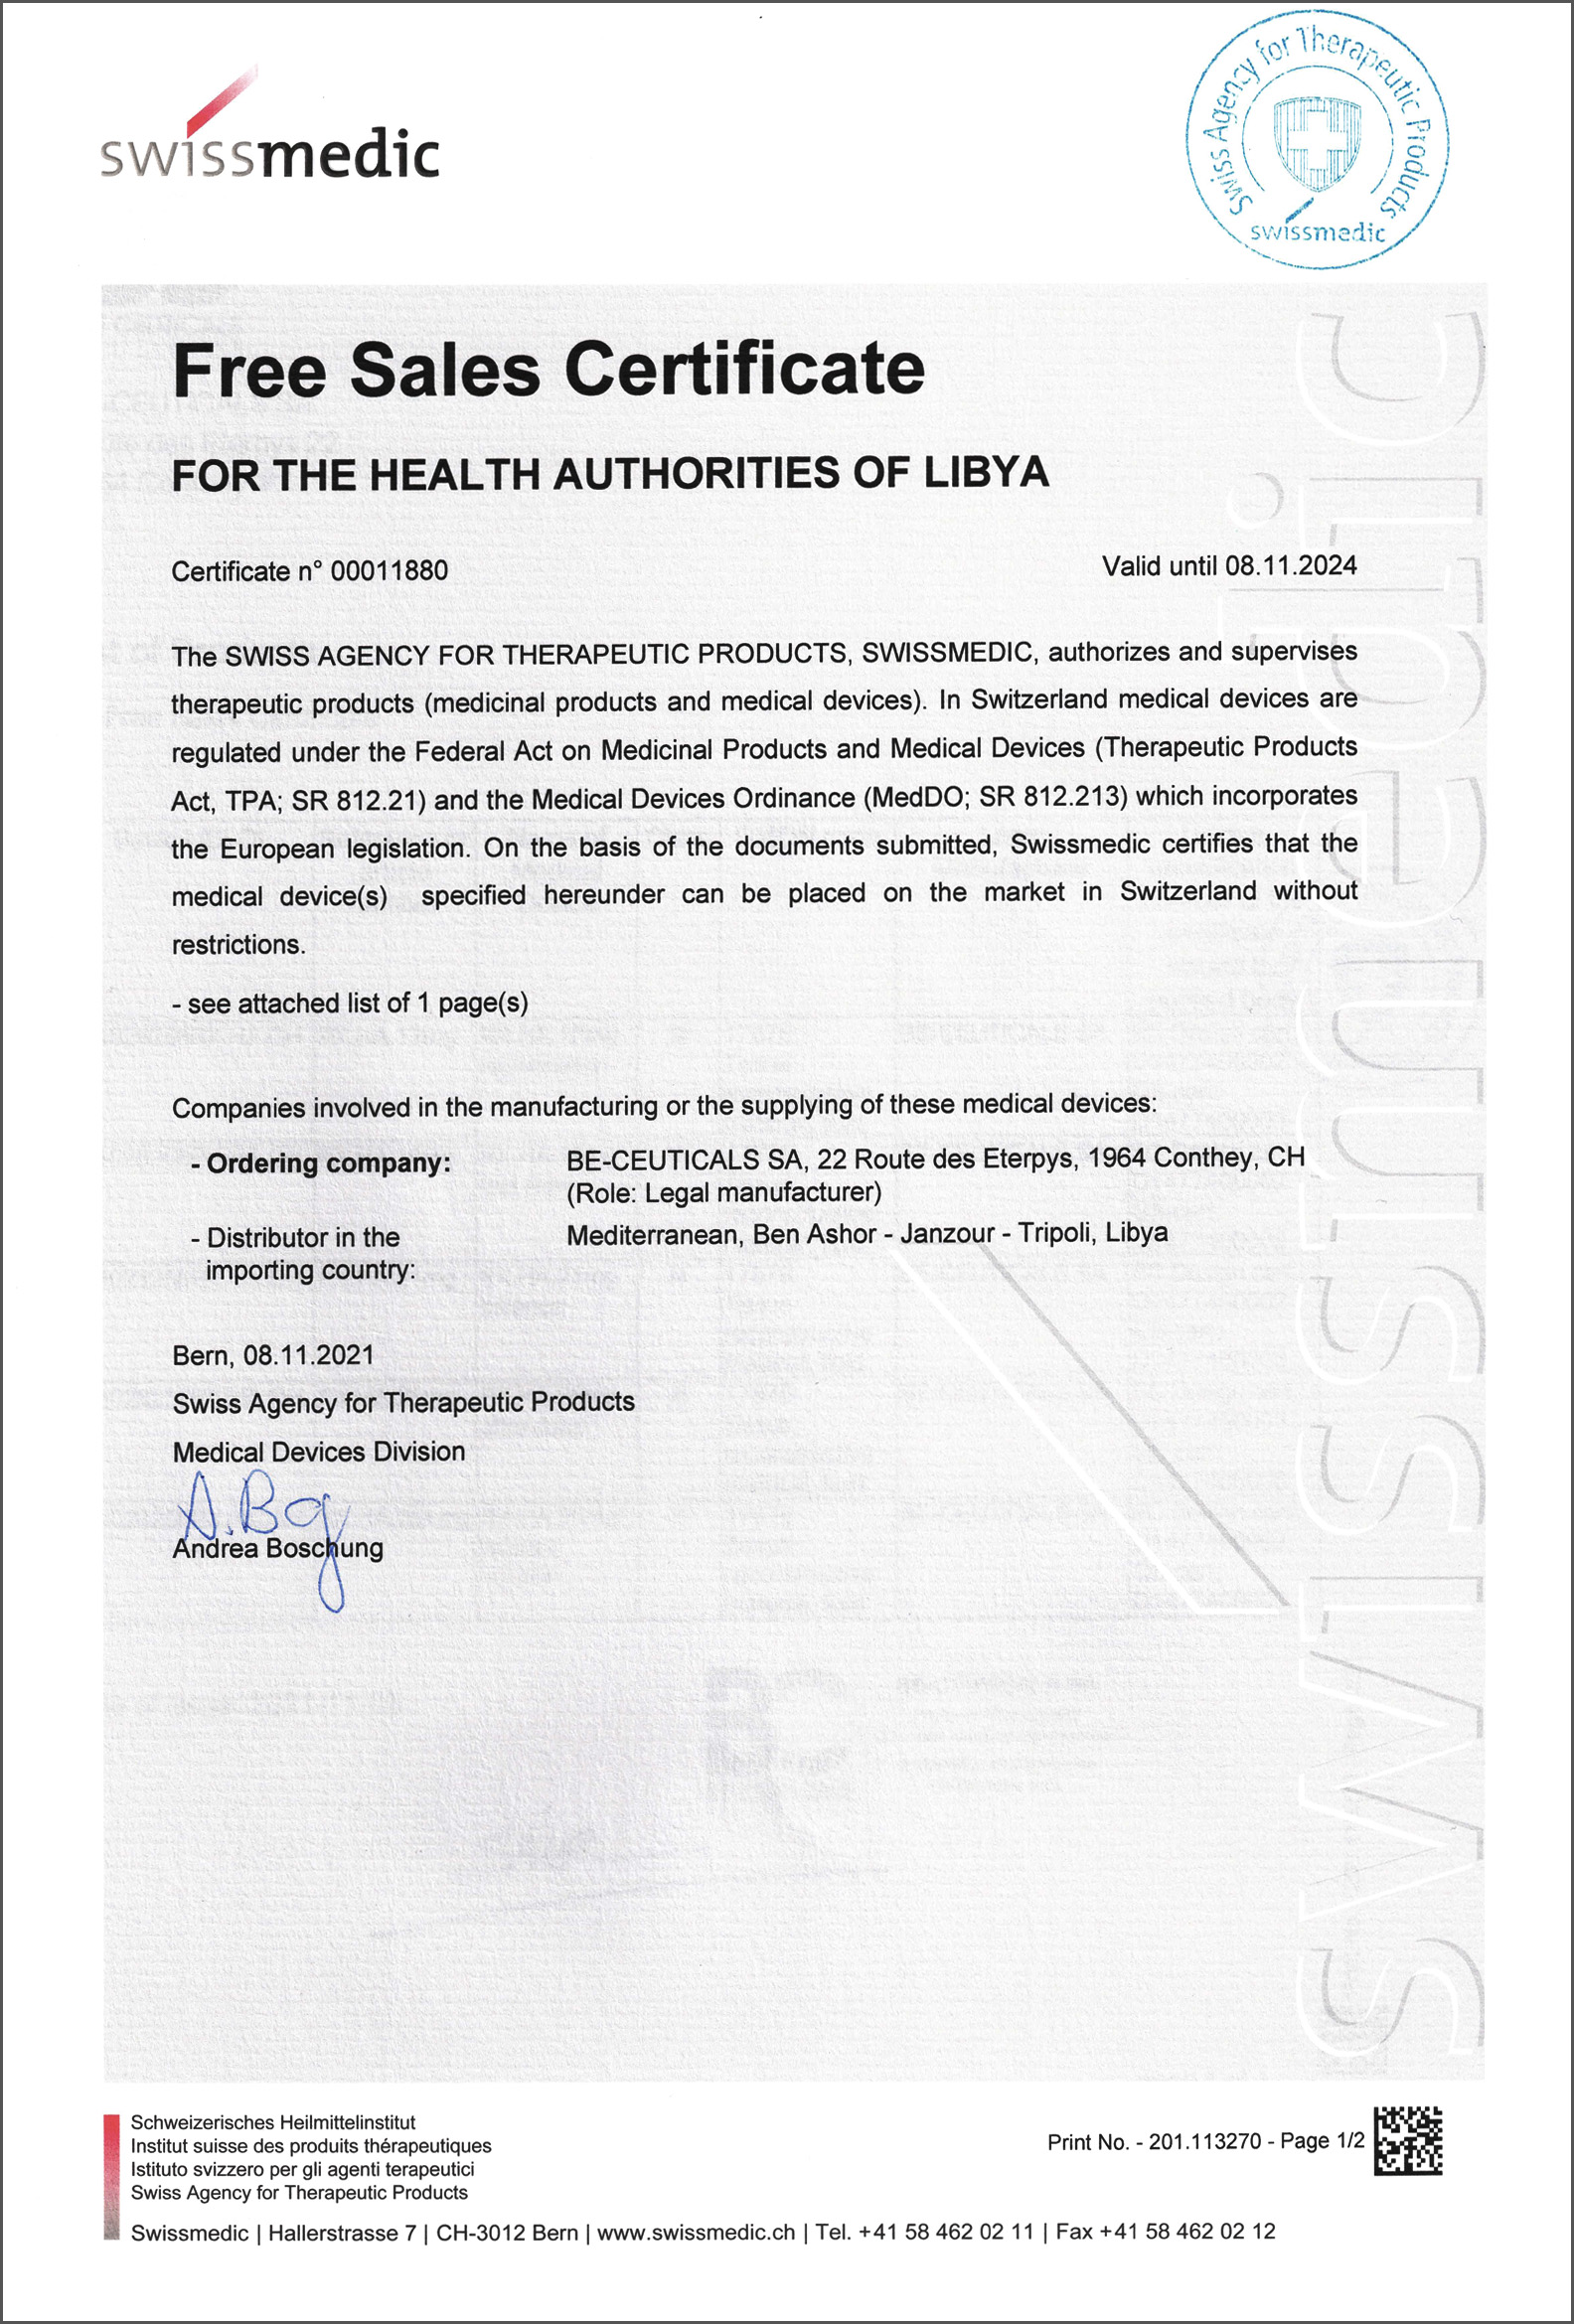 Swissmedic - Free Sales Certificate - Libya